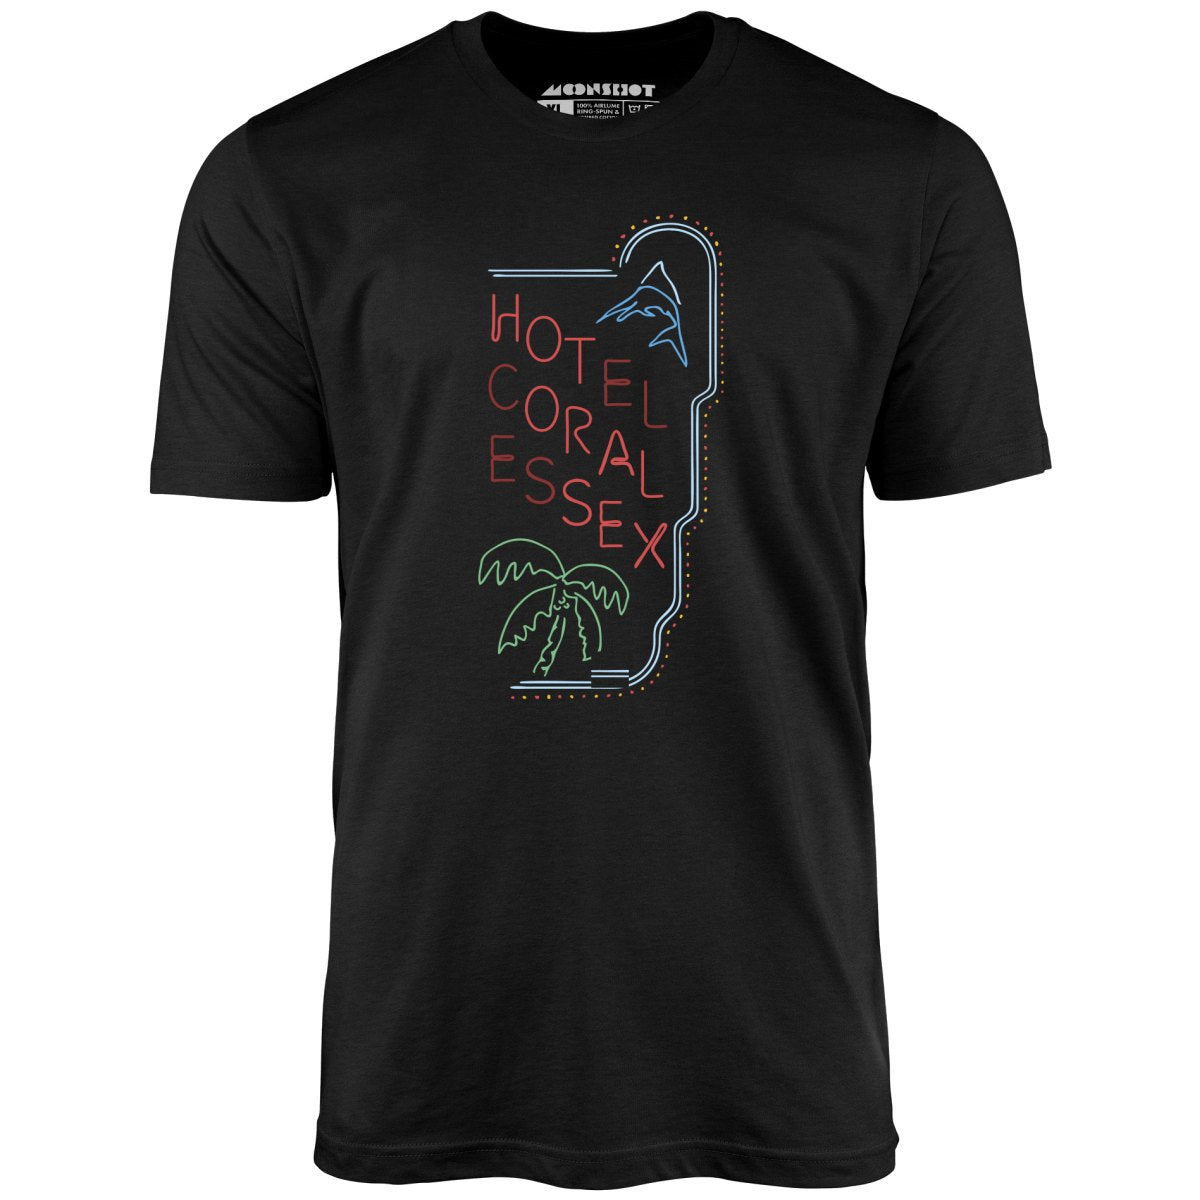 Hotel Coral Essex - Unisex T-Shirt